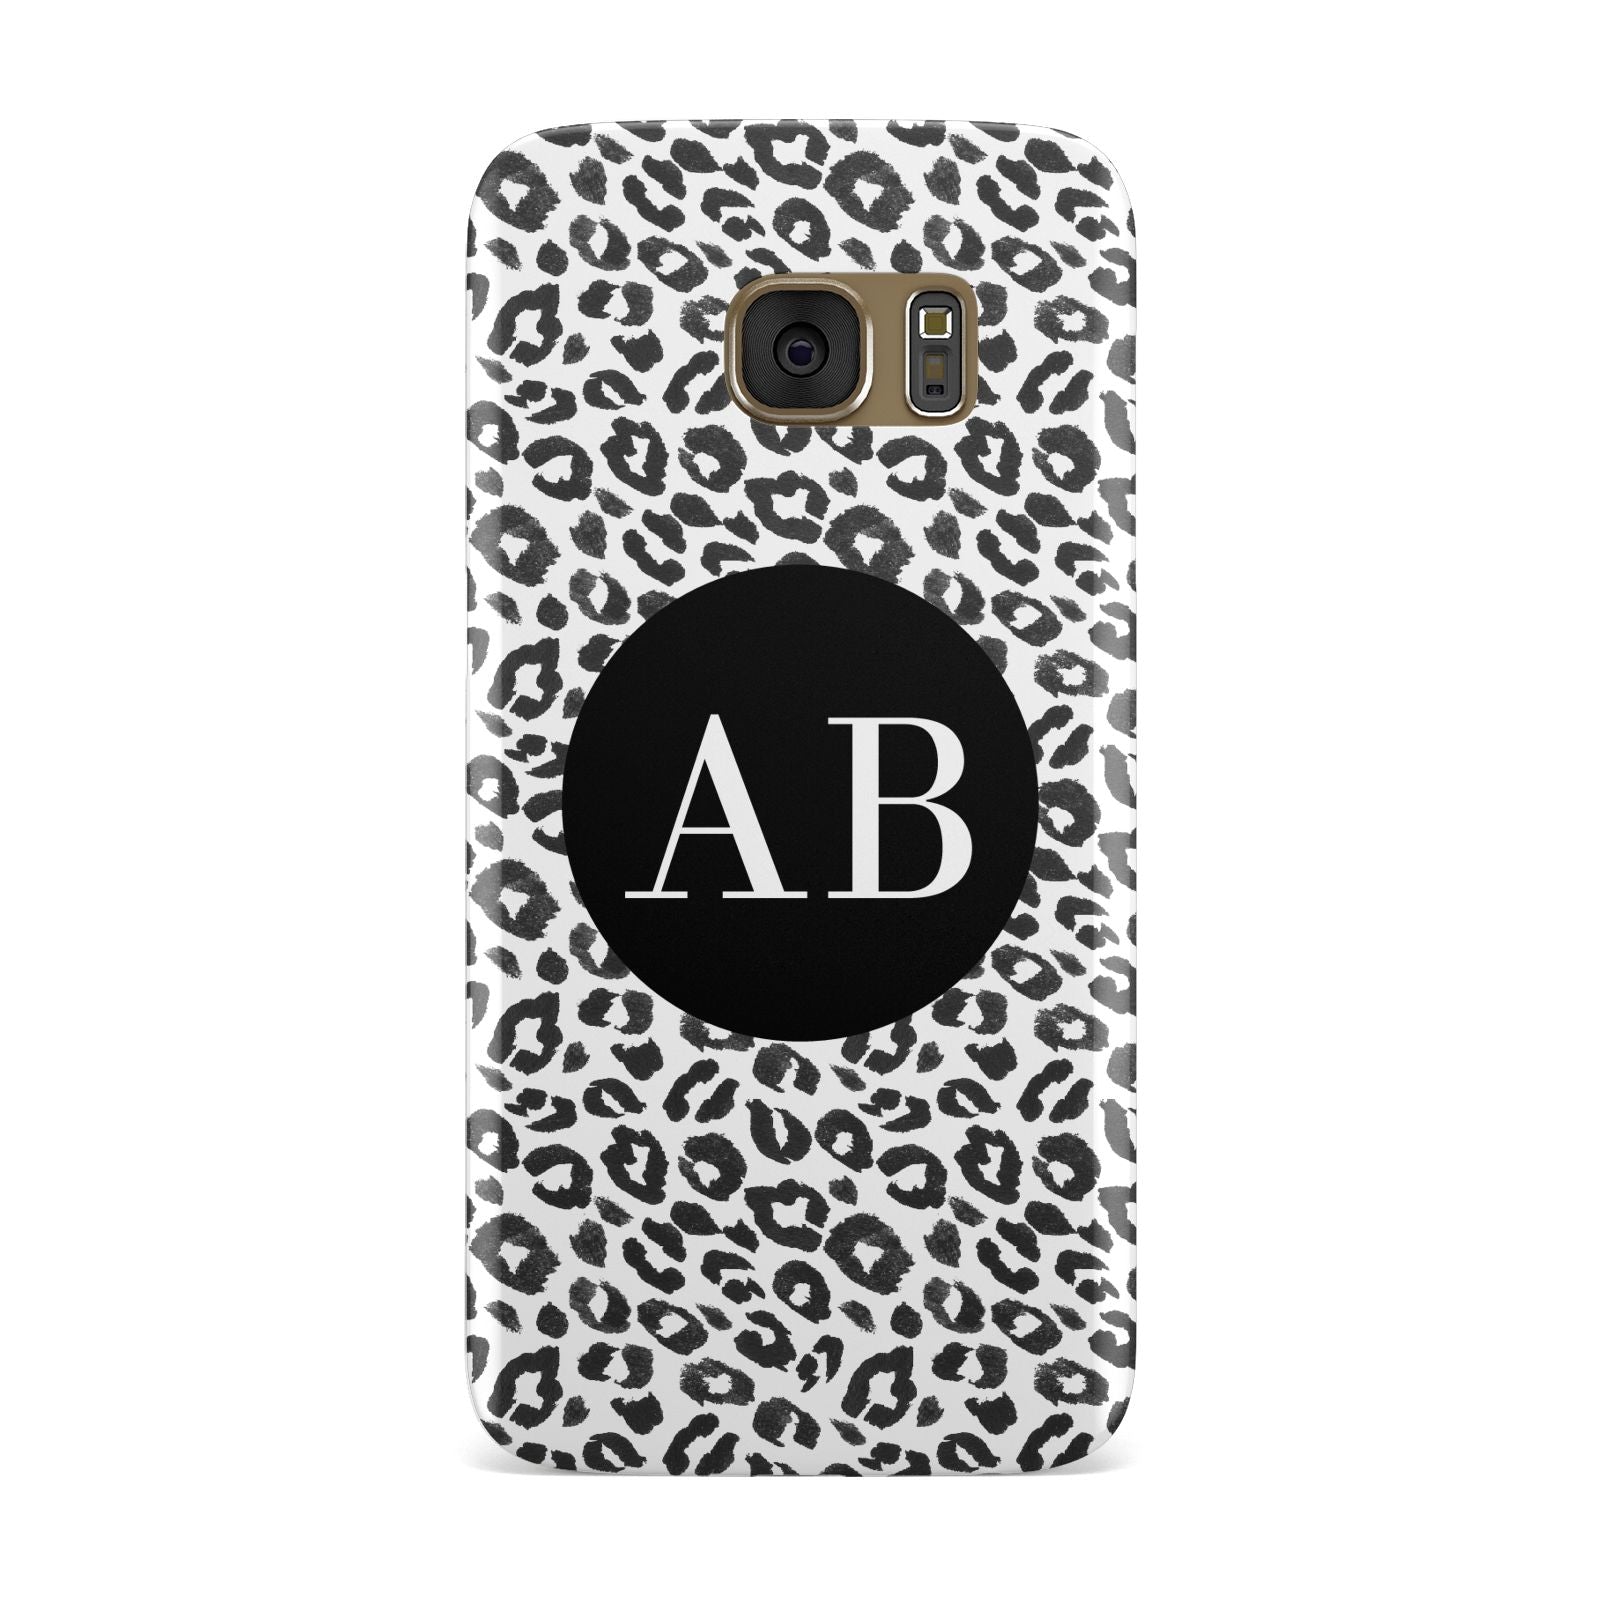 Leopard Print Black and White Samsung Galaxy Case